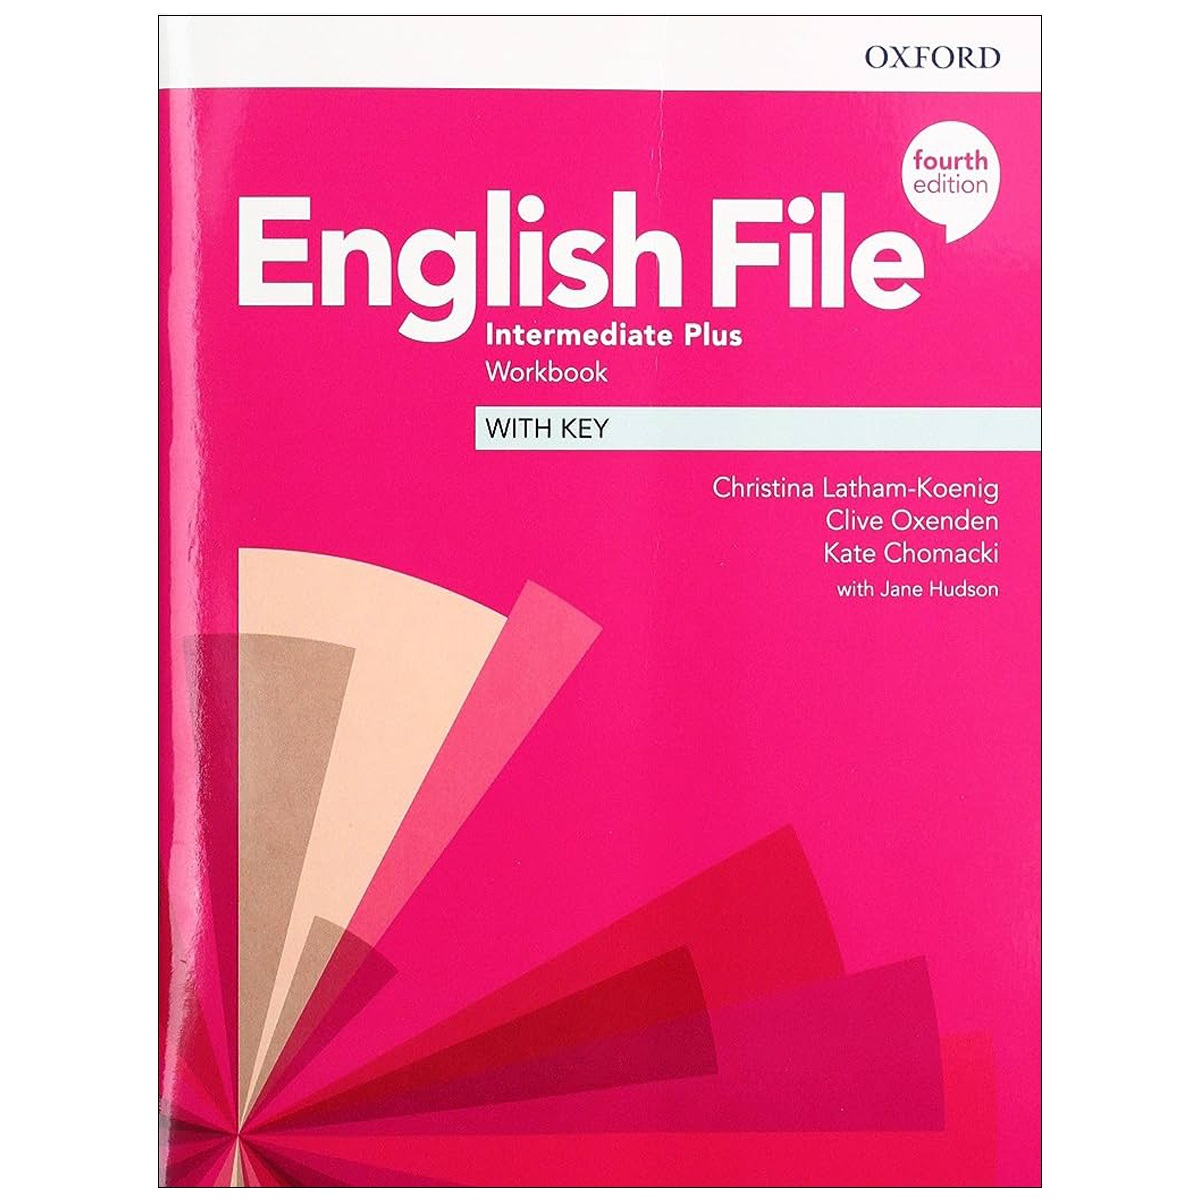 English File Intermediate Plus Fourth Edition